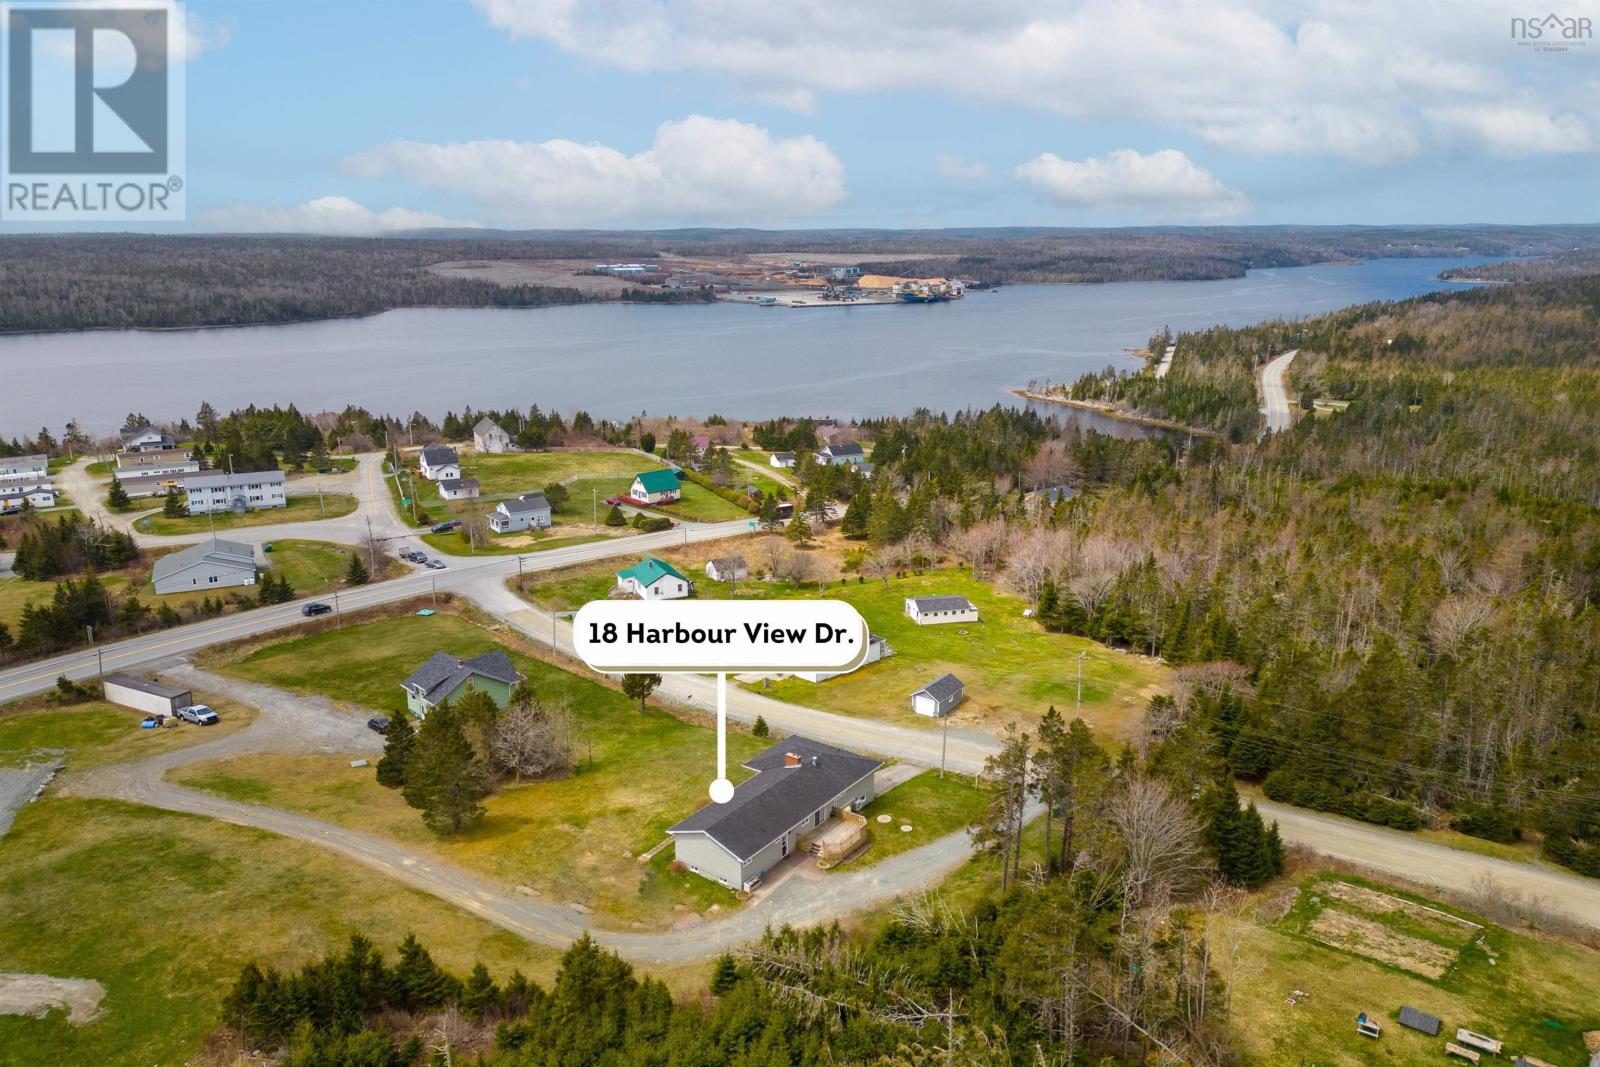 18 Harbour View Drive located in Watt Section, Nova Scotia